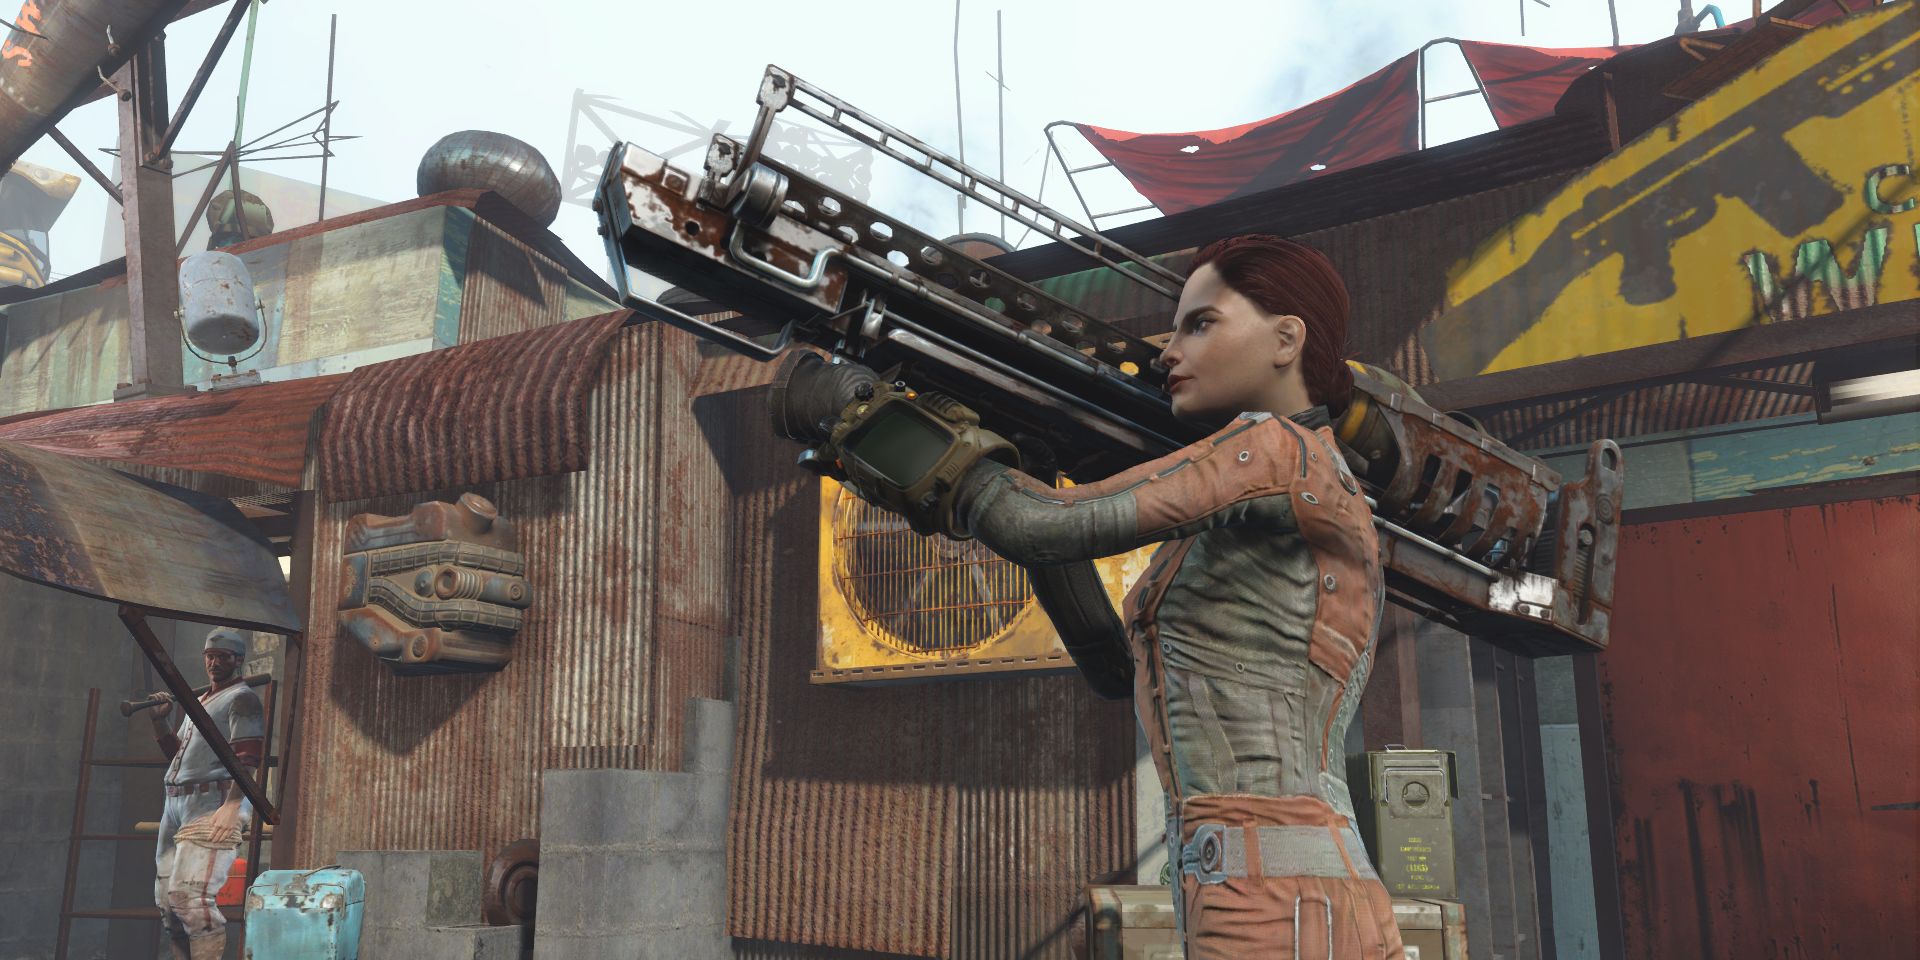 The Sole Survivor holding a unique weapon in Fallout 4